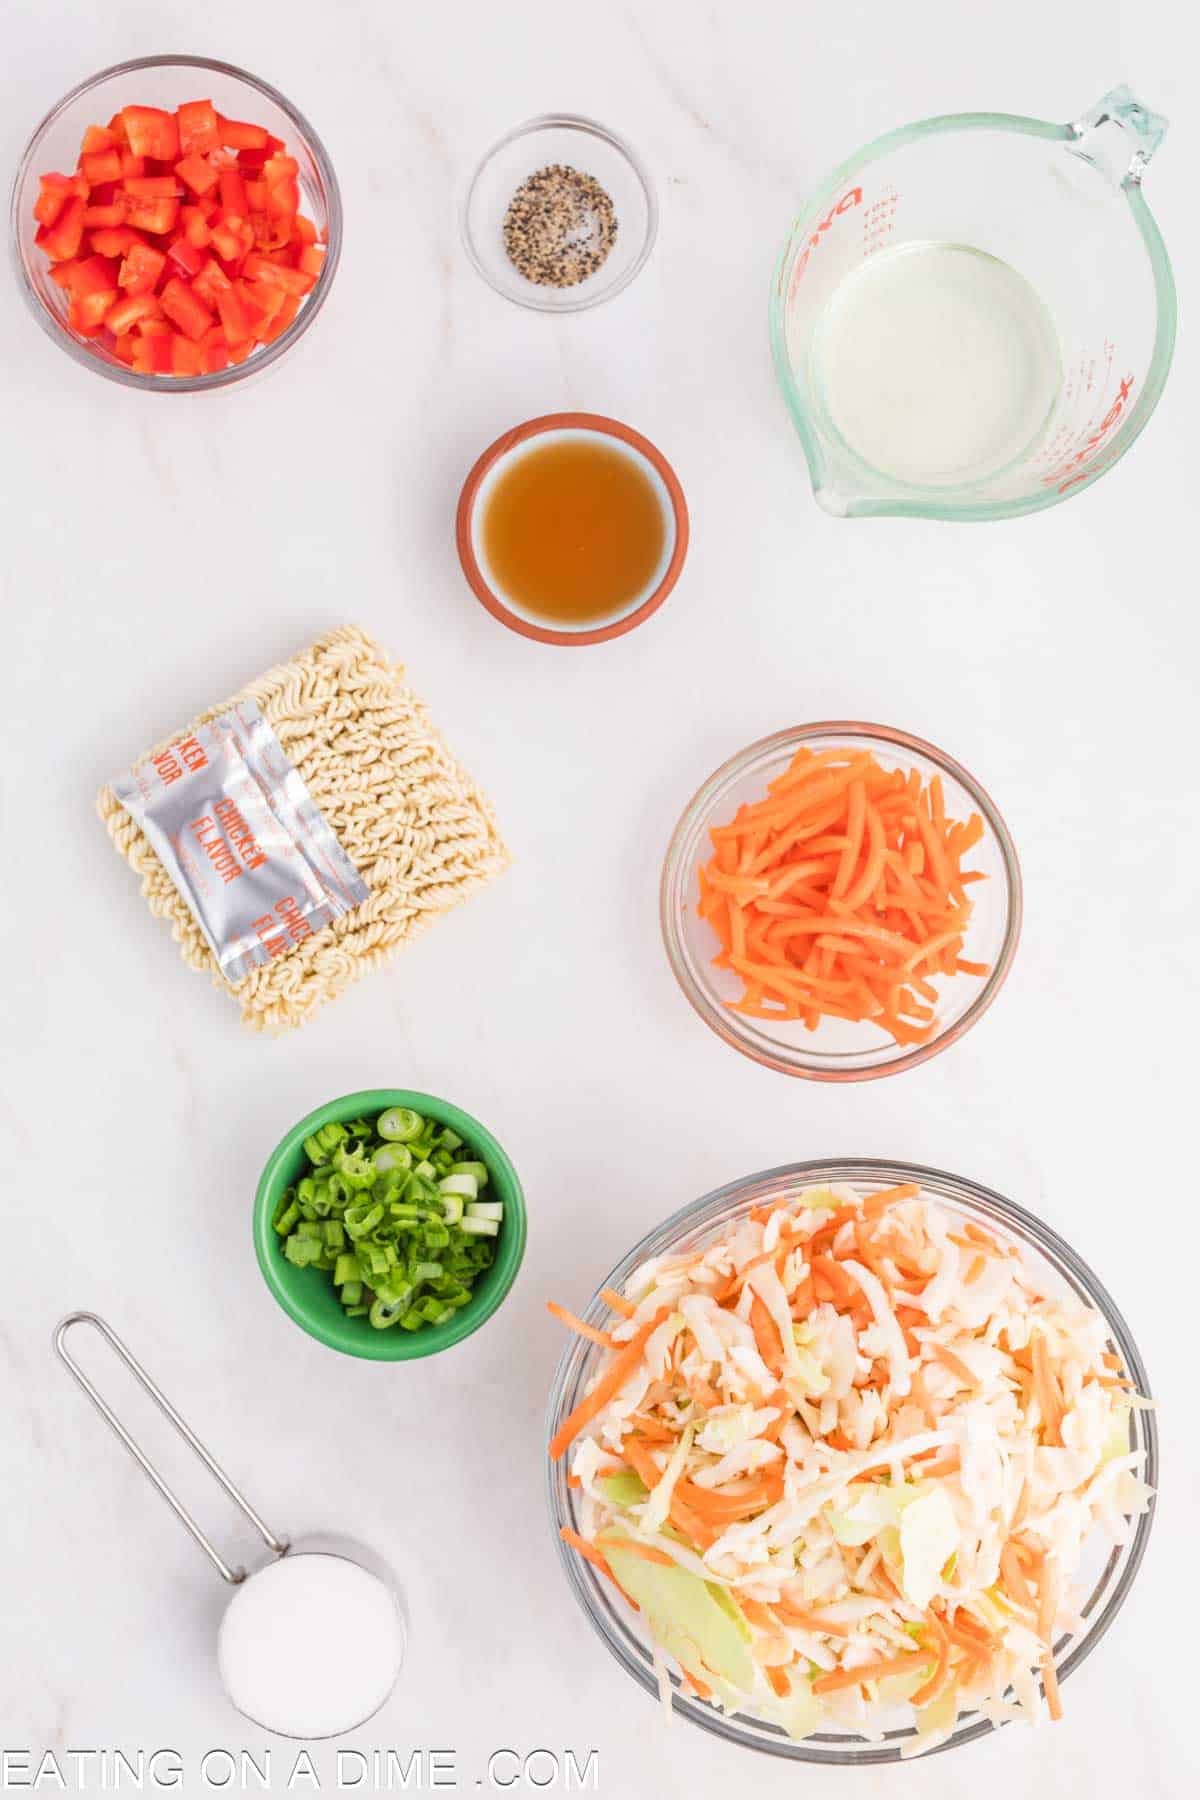 Ingredients needed for Ramen Noodle Salad - Coleslaw Mix, carrots, red pepper, green onions, ramen noodles, oil, apple cider vinegar, sugar, ramen chicken seasoning packet, black pepper, soy sauce